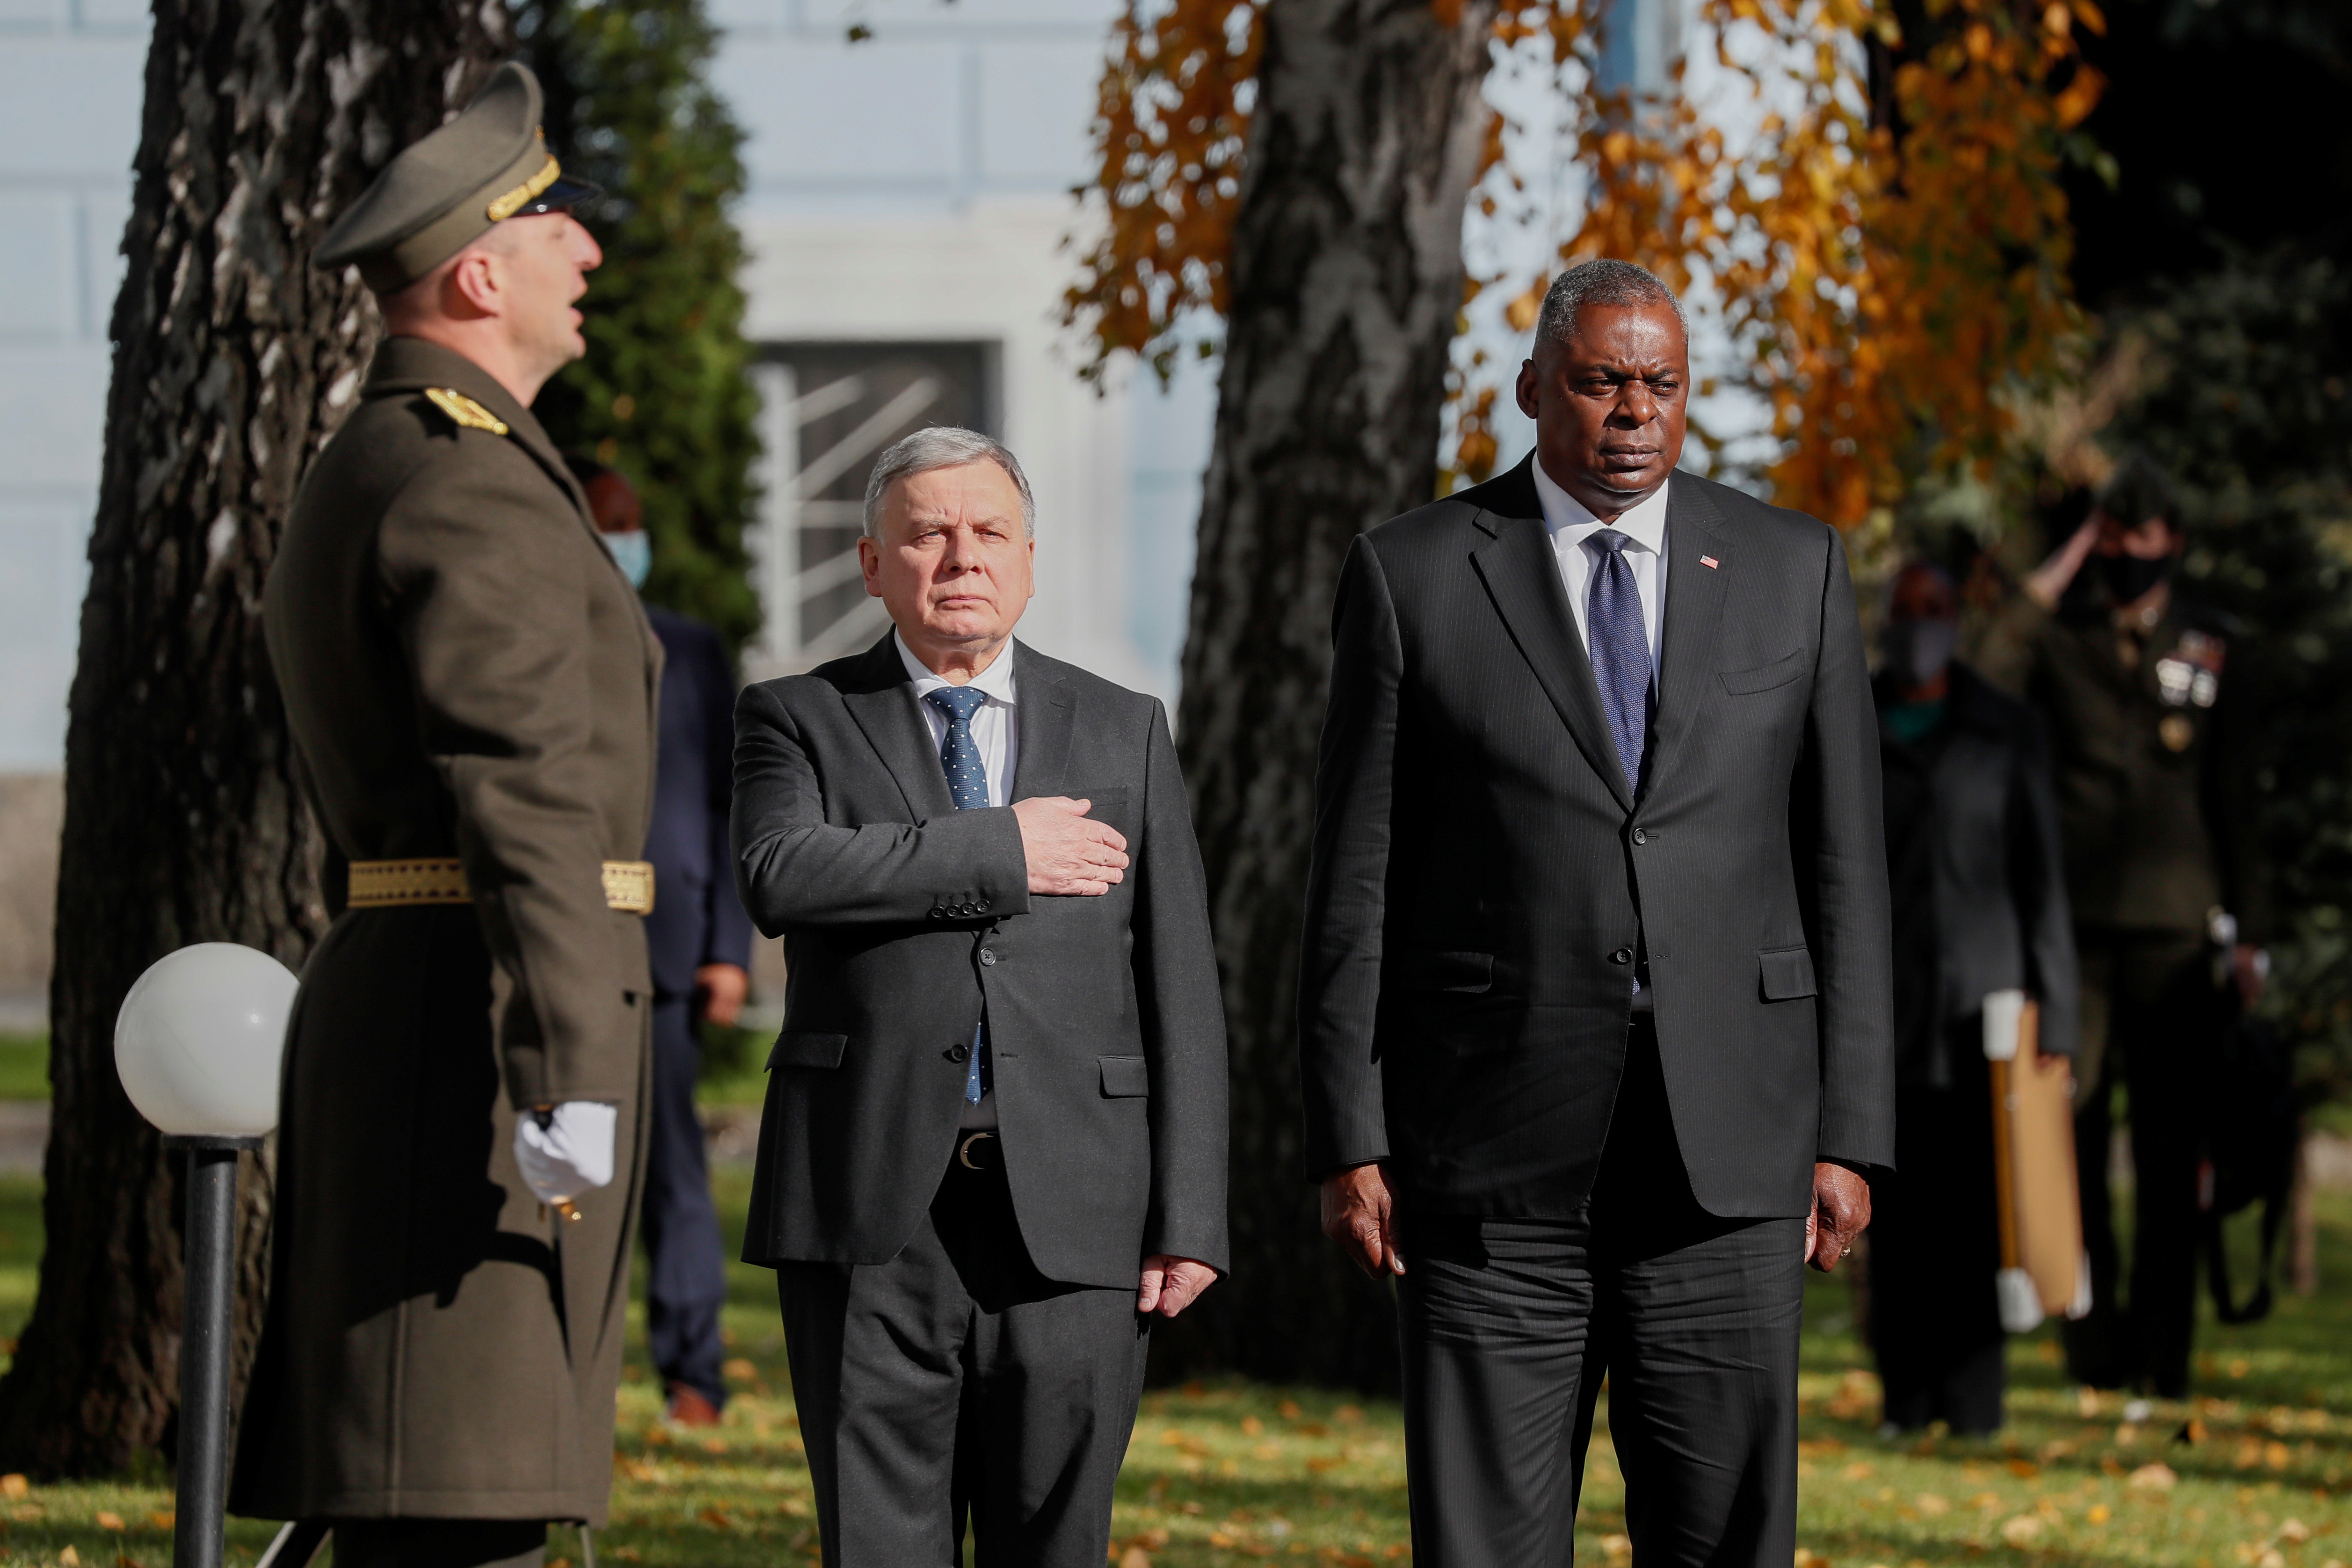 U.S. Defense Secretary Lloyd Austin and Ukrainian Defence Minister Andriy Taran attend a welcoming ceremony prior to their meeting in Kyiv, Ukraine October 19, 2021. REUTERS/Gleb Garanich